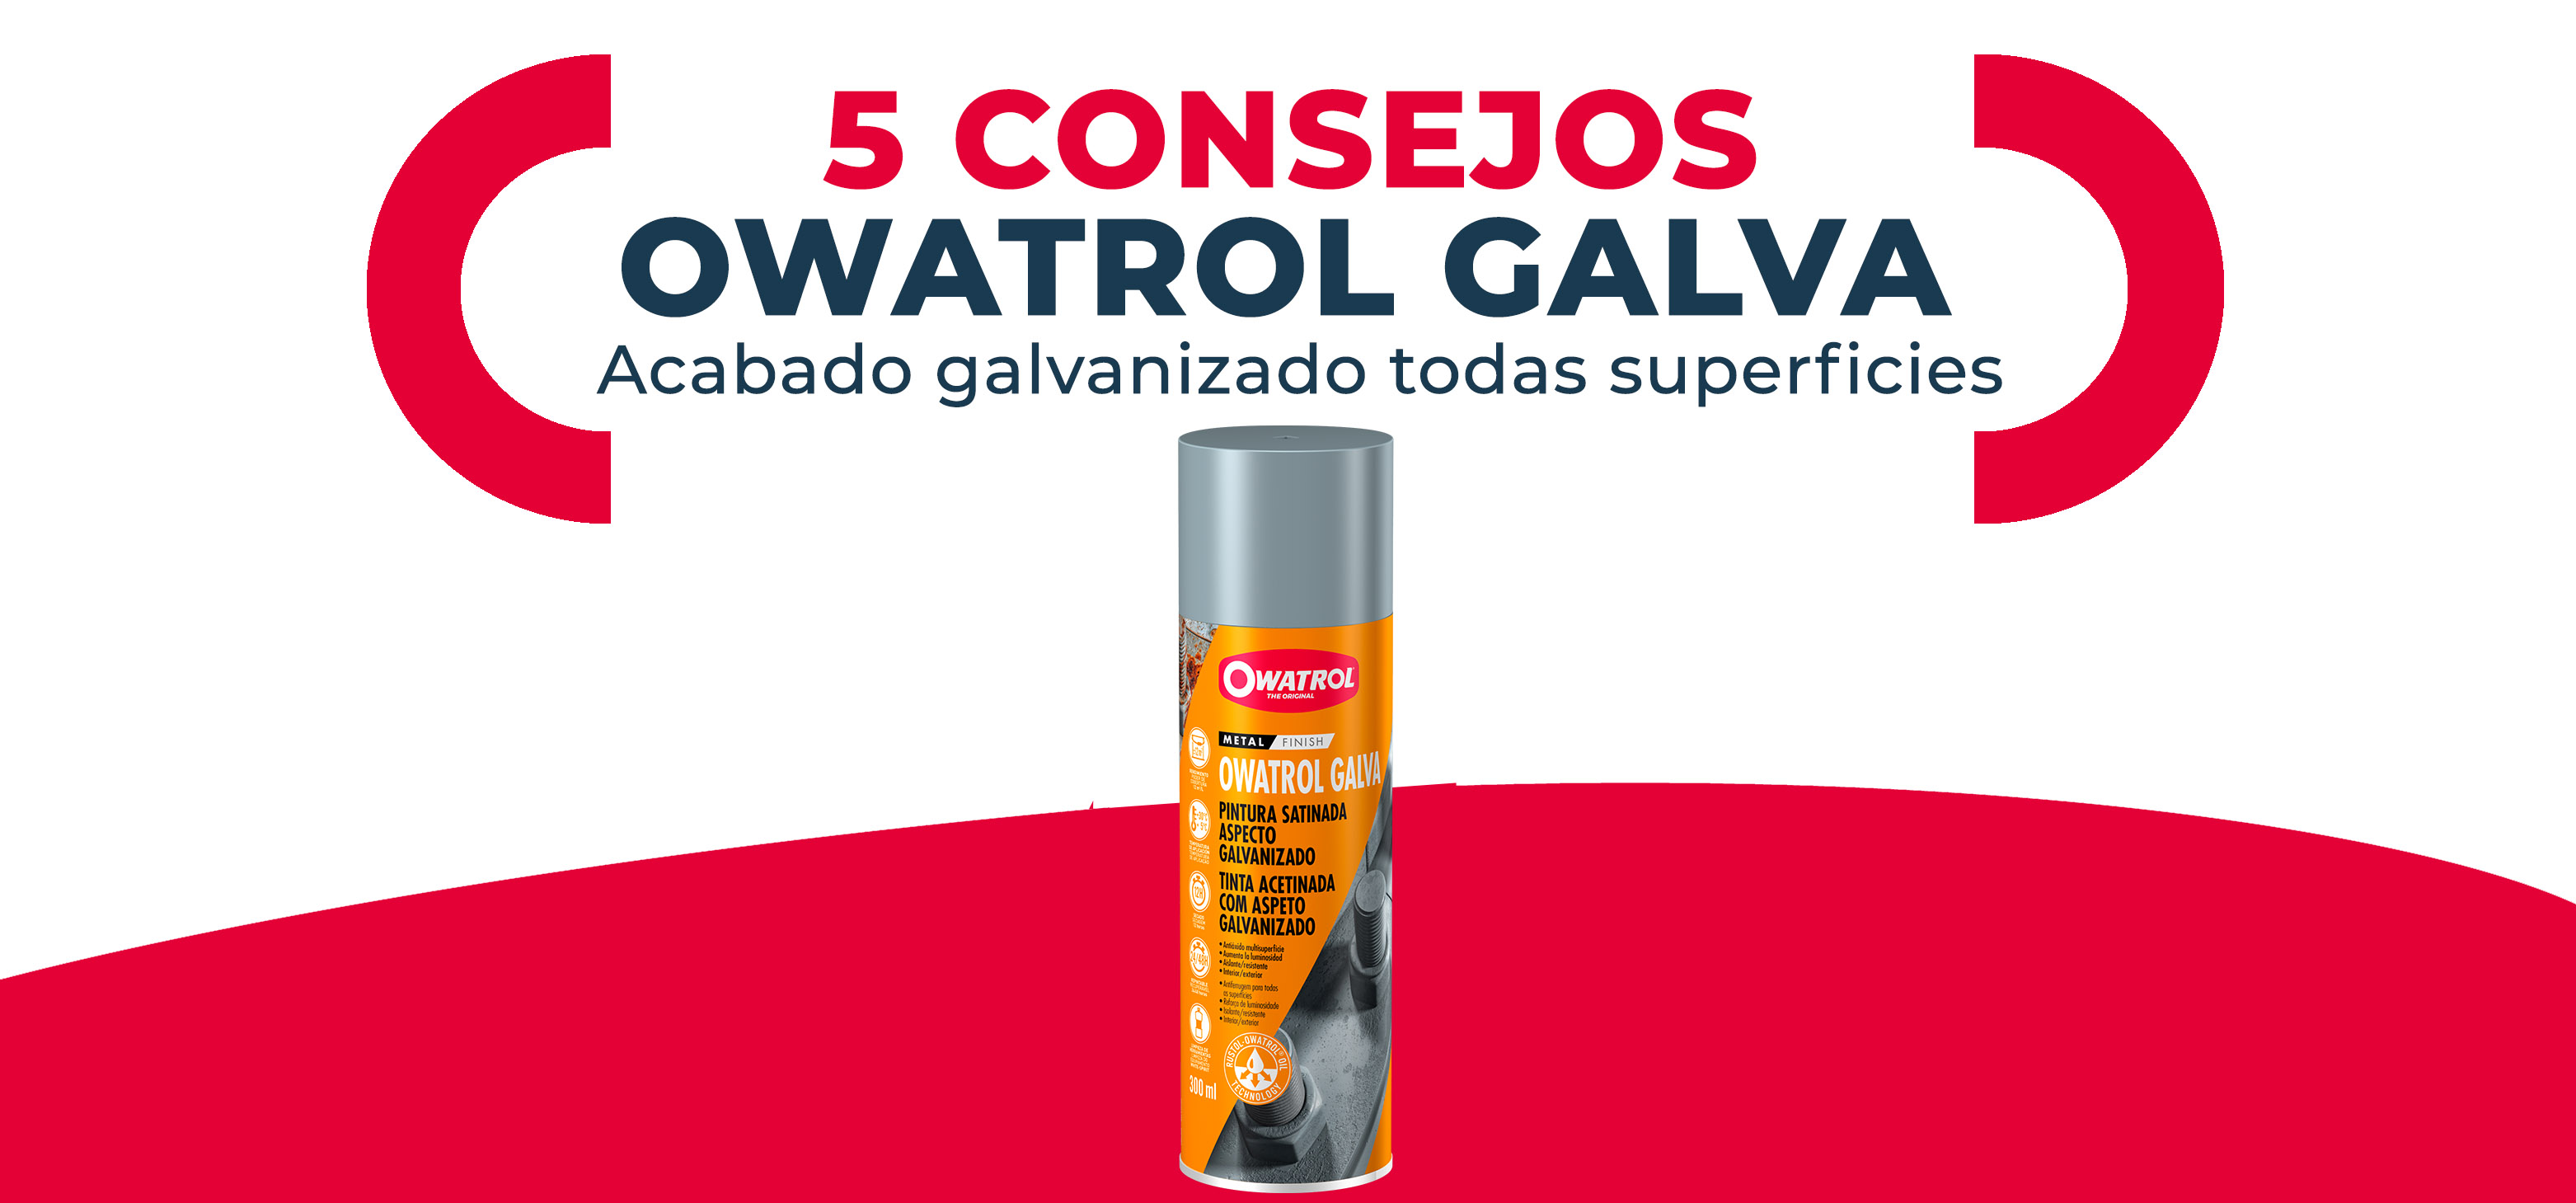 Owatrol Galva - Acabado galvanizado